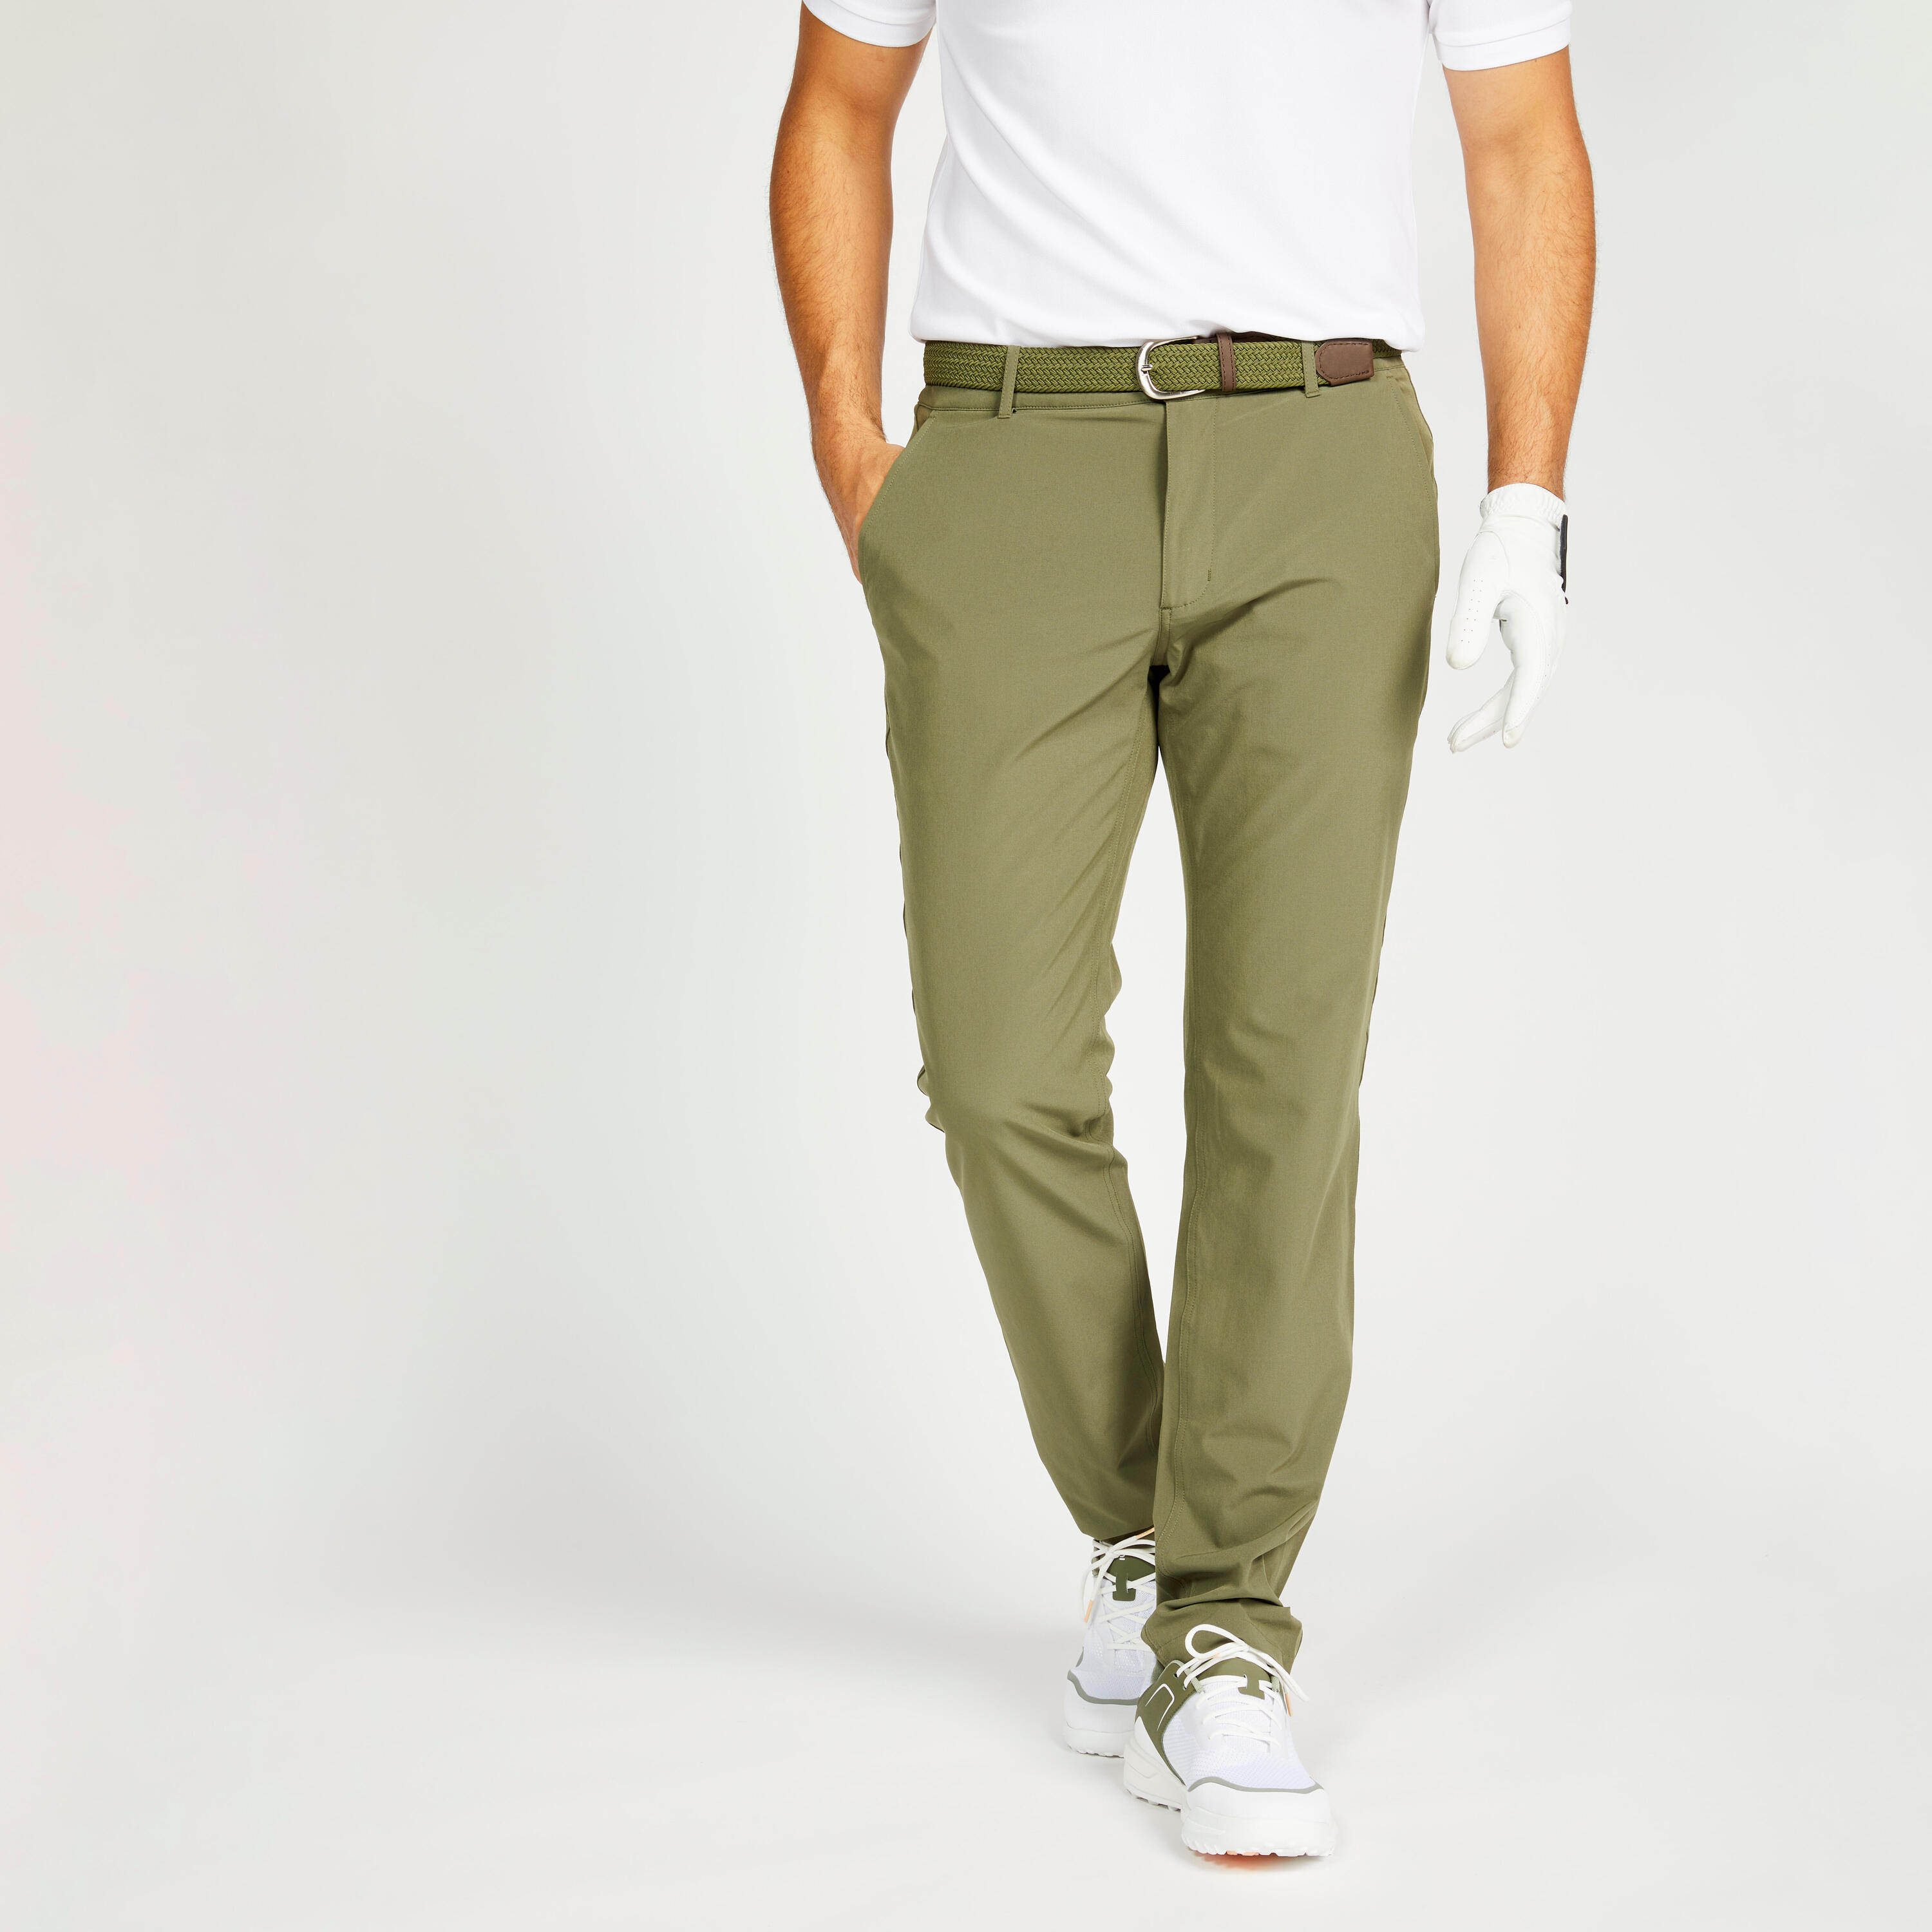 INESIS Men's golf trousers - WW 500 khaki